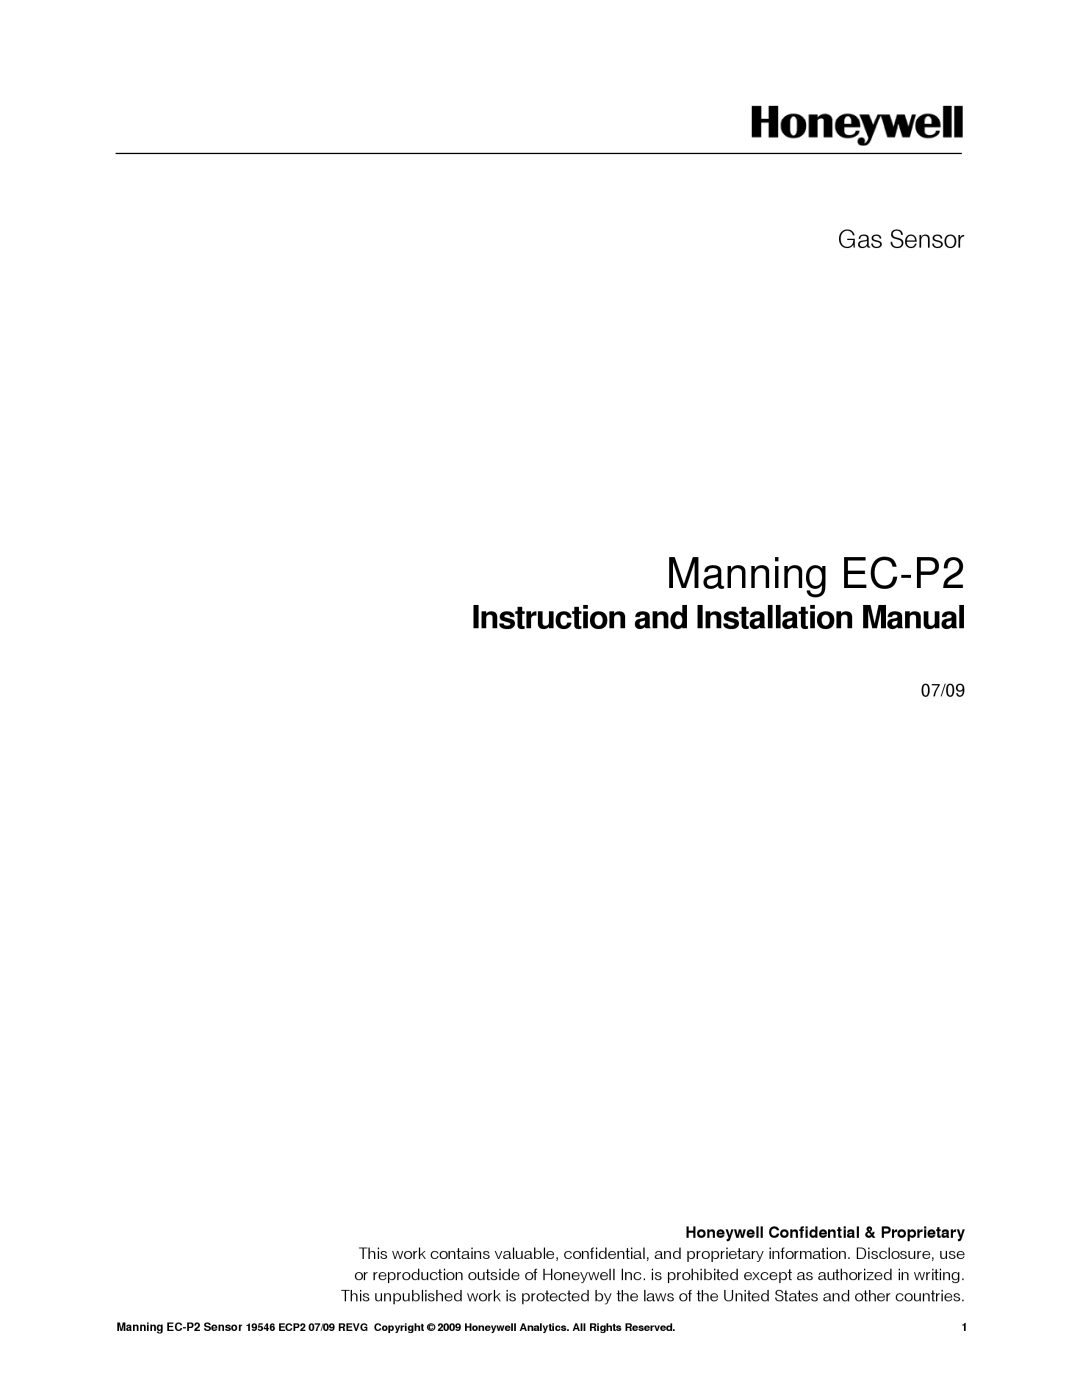 Honeywell Manning EC-P2 installation manual Instruction and Installation Manual, Release G Draft, Gas Sensor, 07/09 